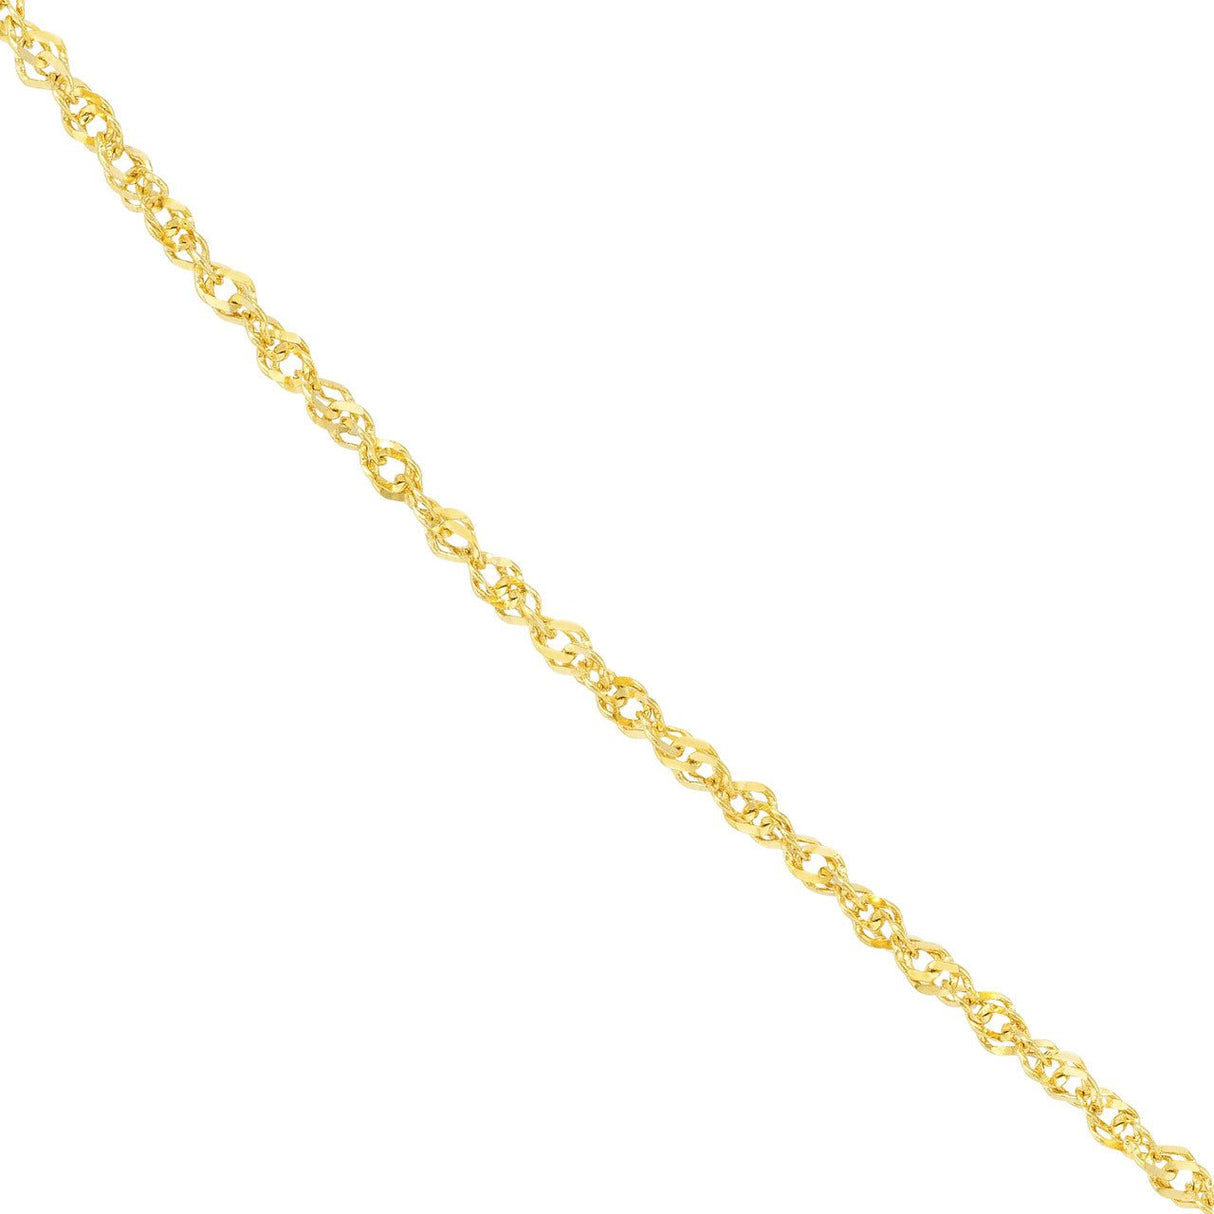 14K Gold Chain, 24", 1.5mm Sparkle Singapore Chain with Lobster Lock, Gold Layered Chain, Gold Layered Necklaces, - Diamond Origin